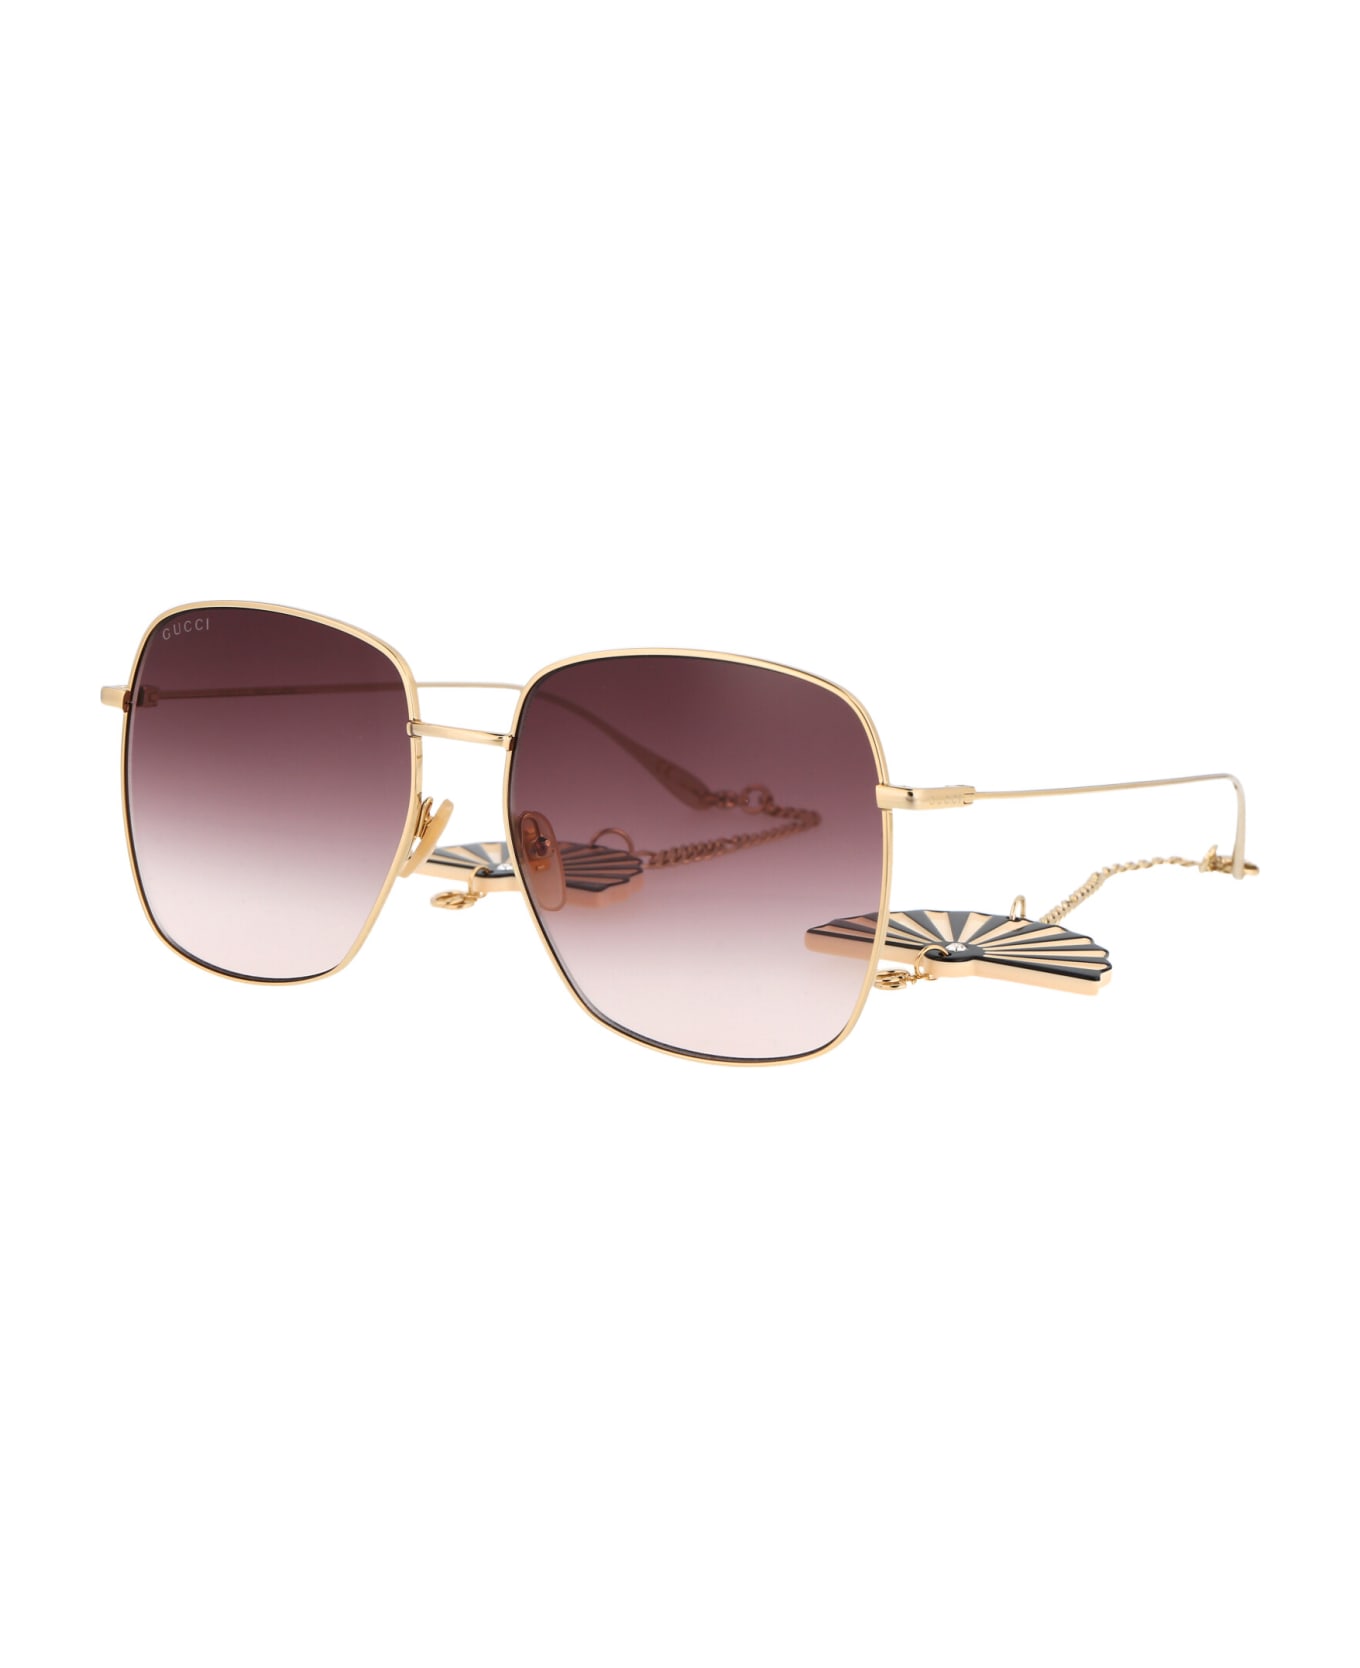 Gucci Eyewear Gg1031s Sunglasses - 010 GOLD GOLD RED